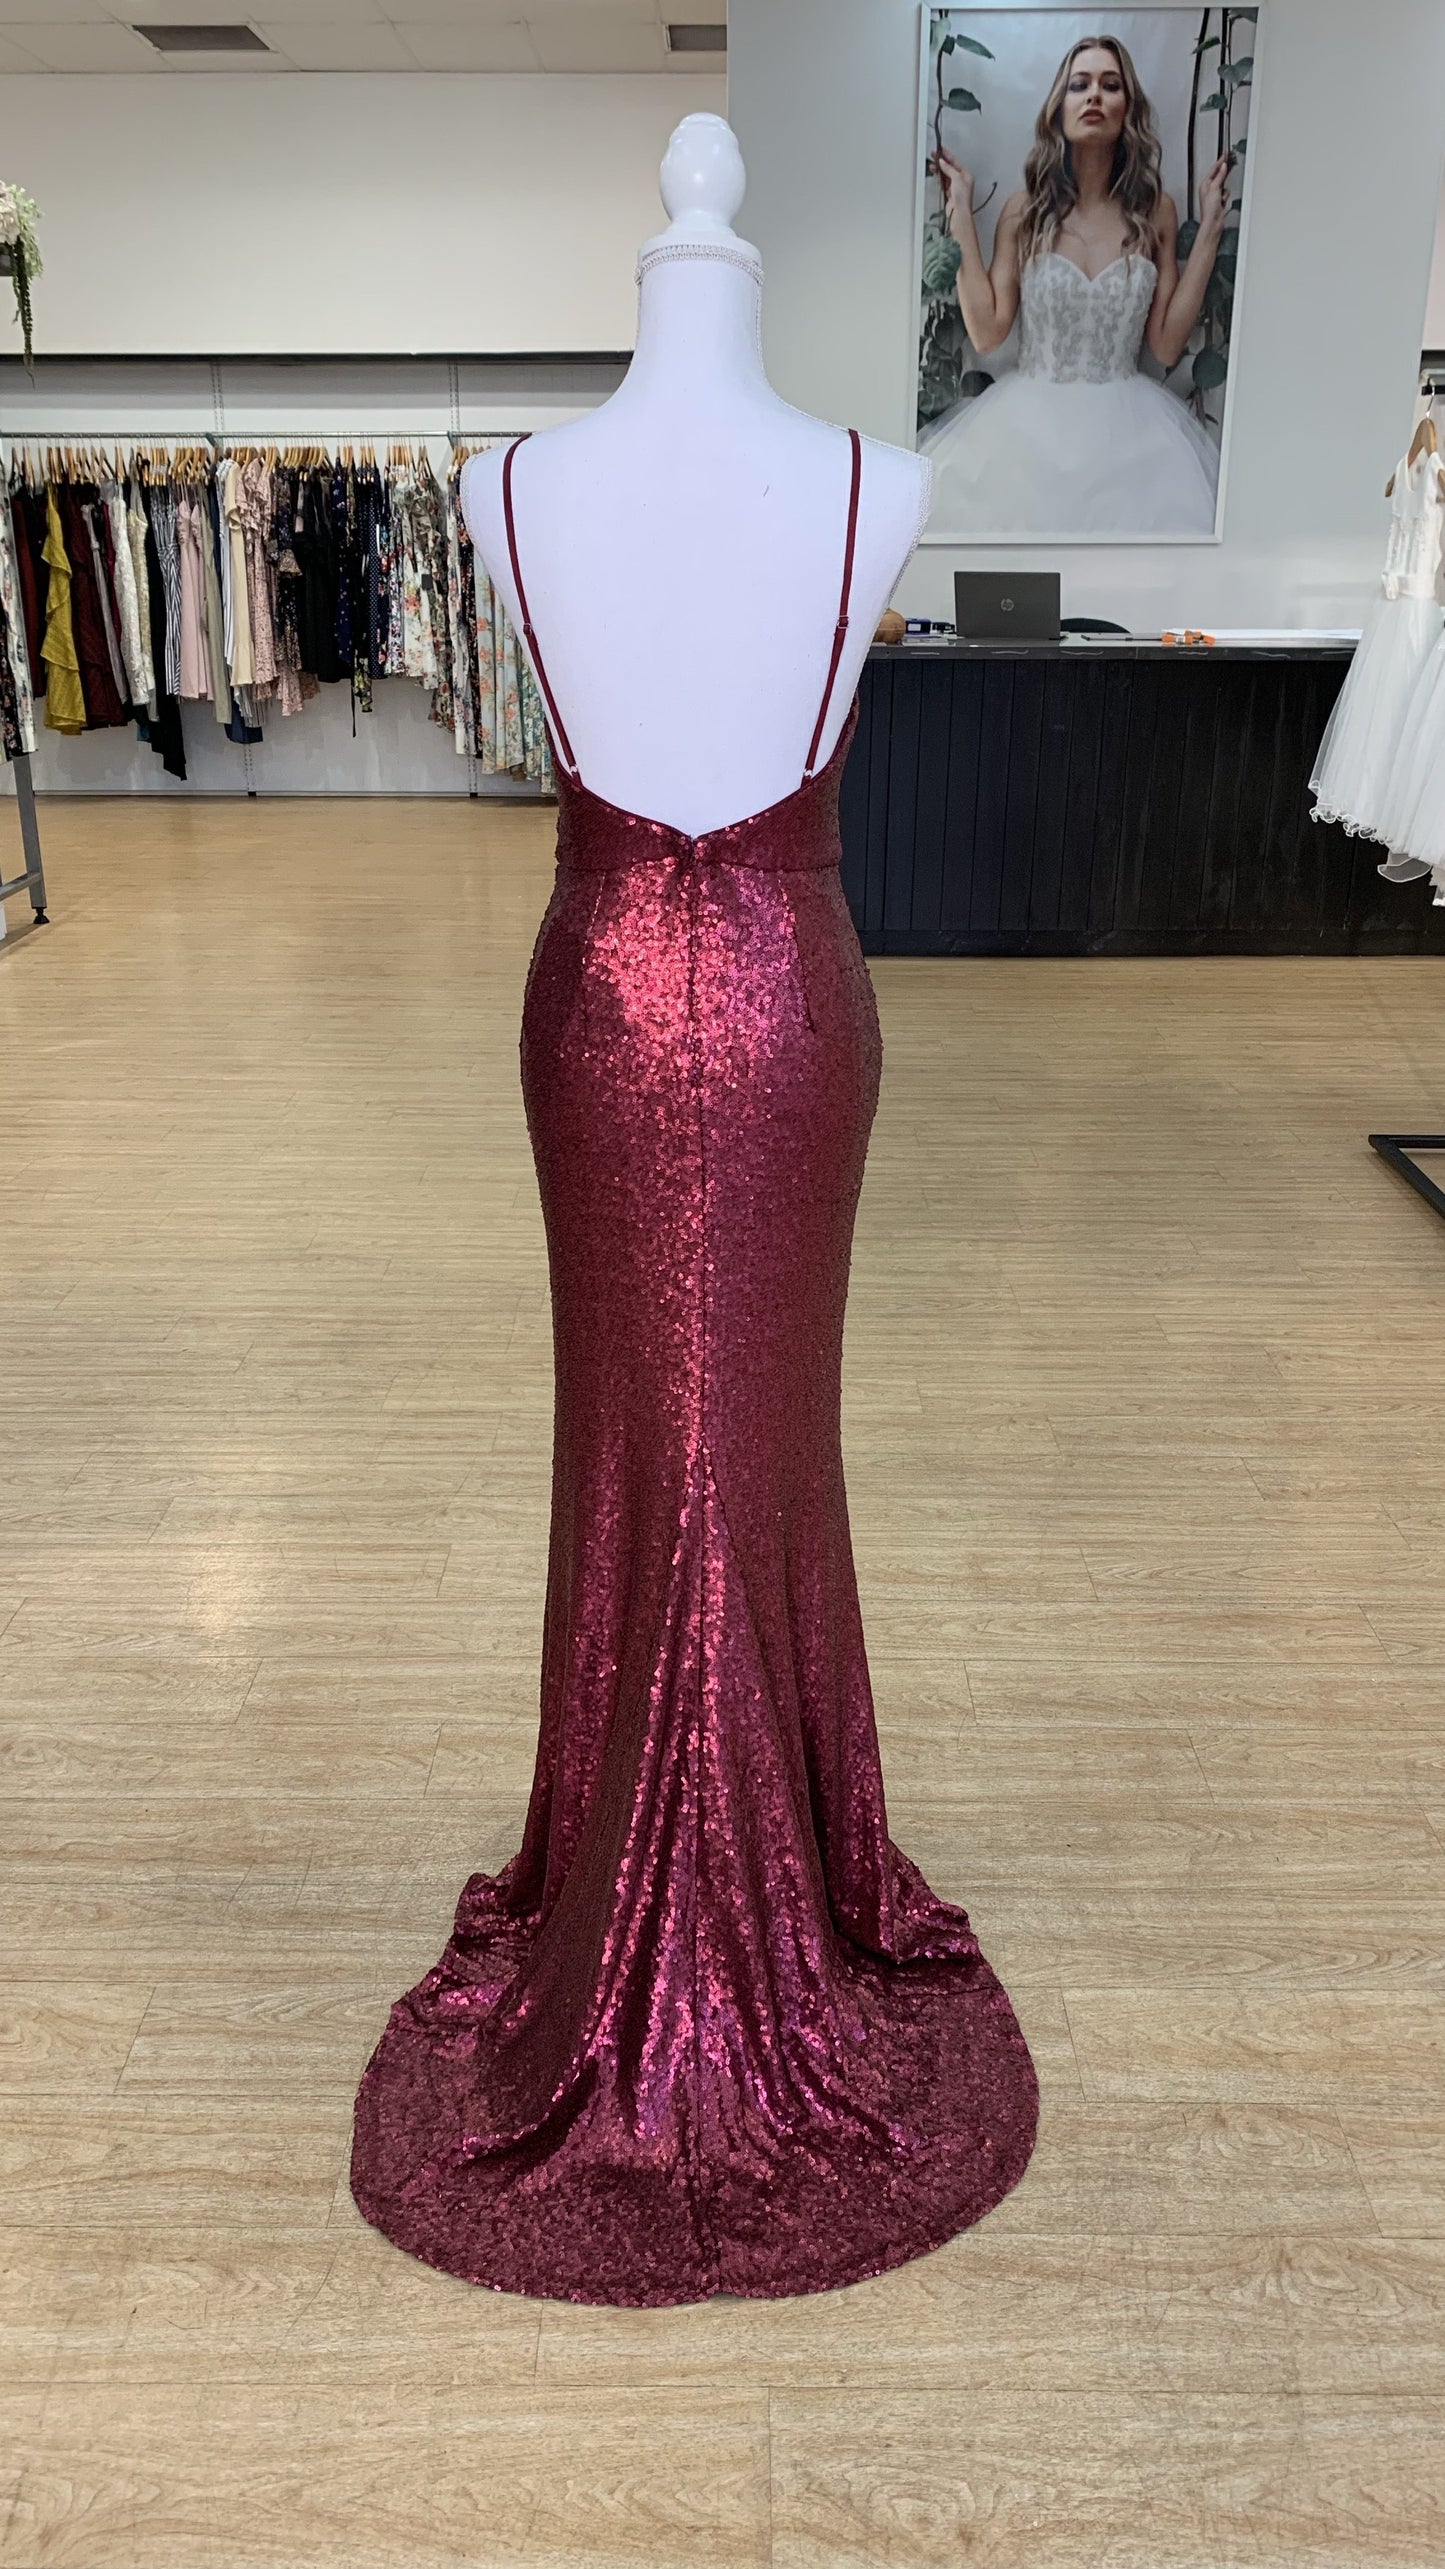 Red Carpet Sequin Dress 217450